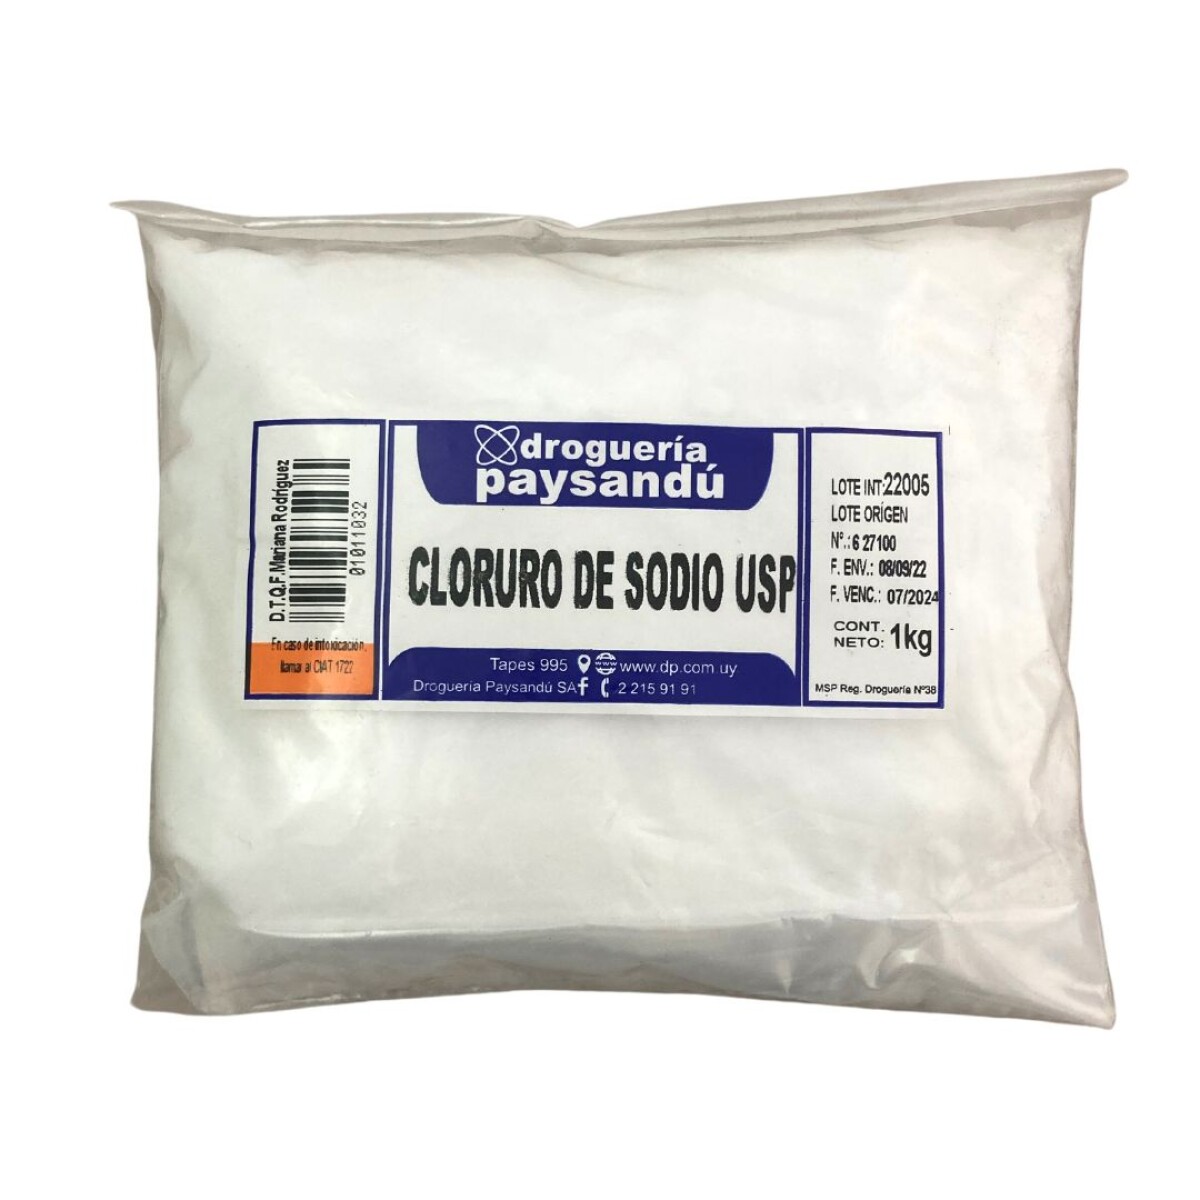 Cloruro de sodio USP - 1 kg 